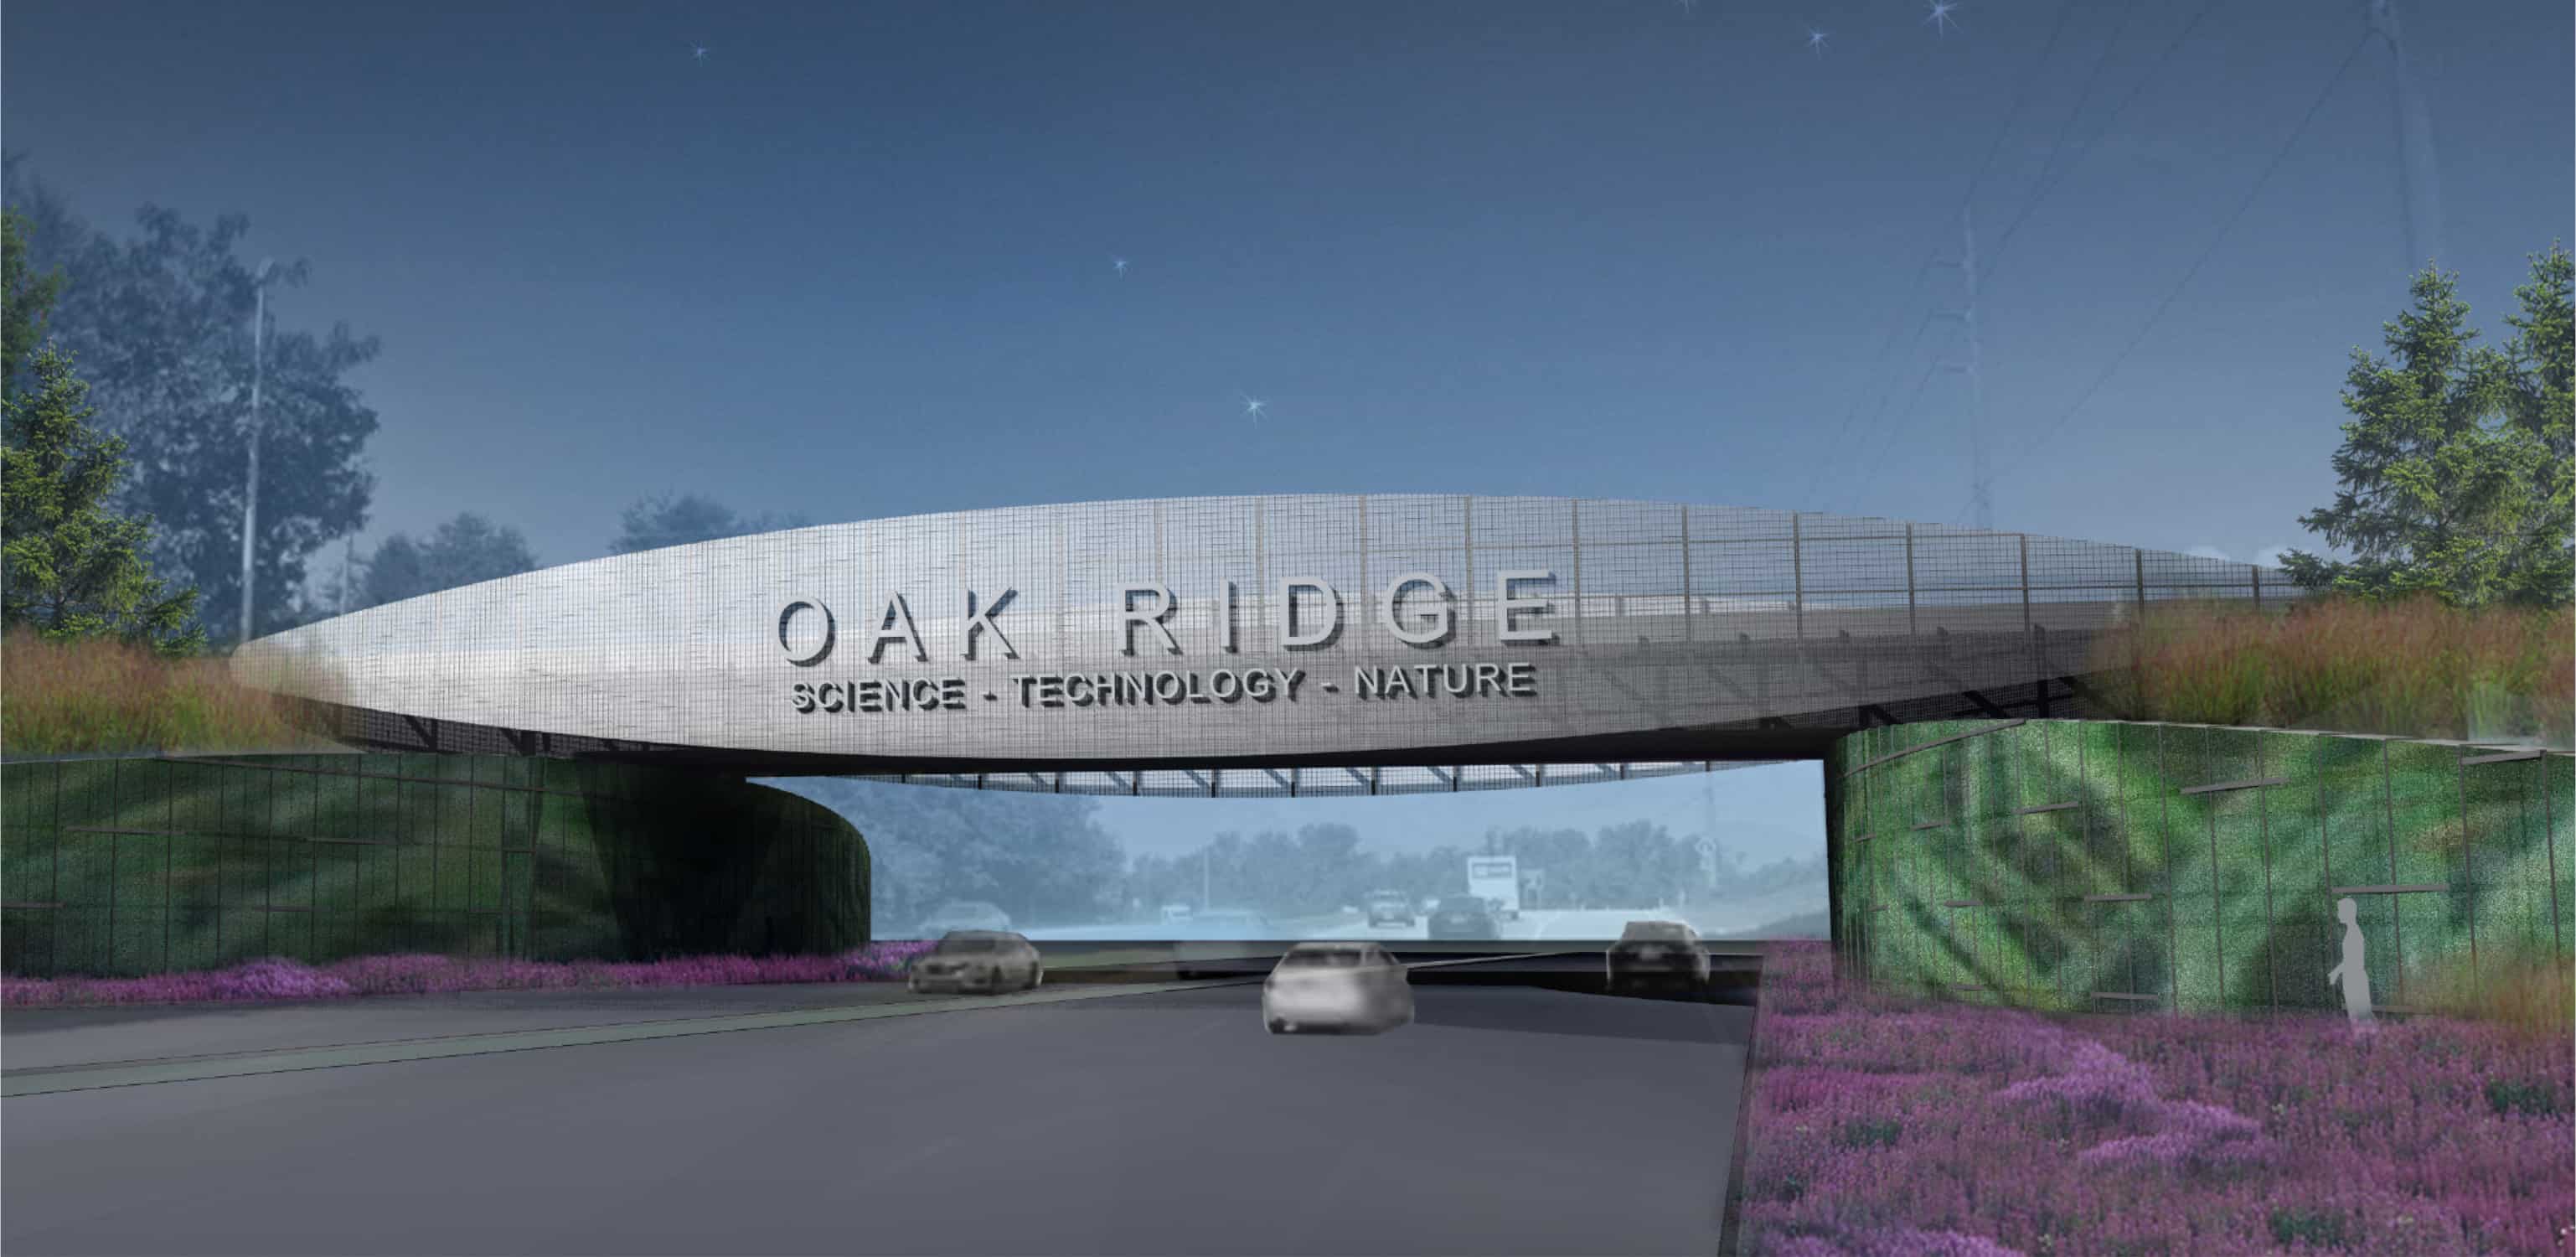 Featured image for “Oak Ridge Gateway”